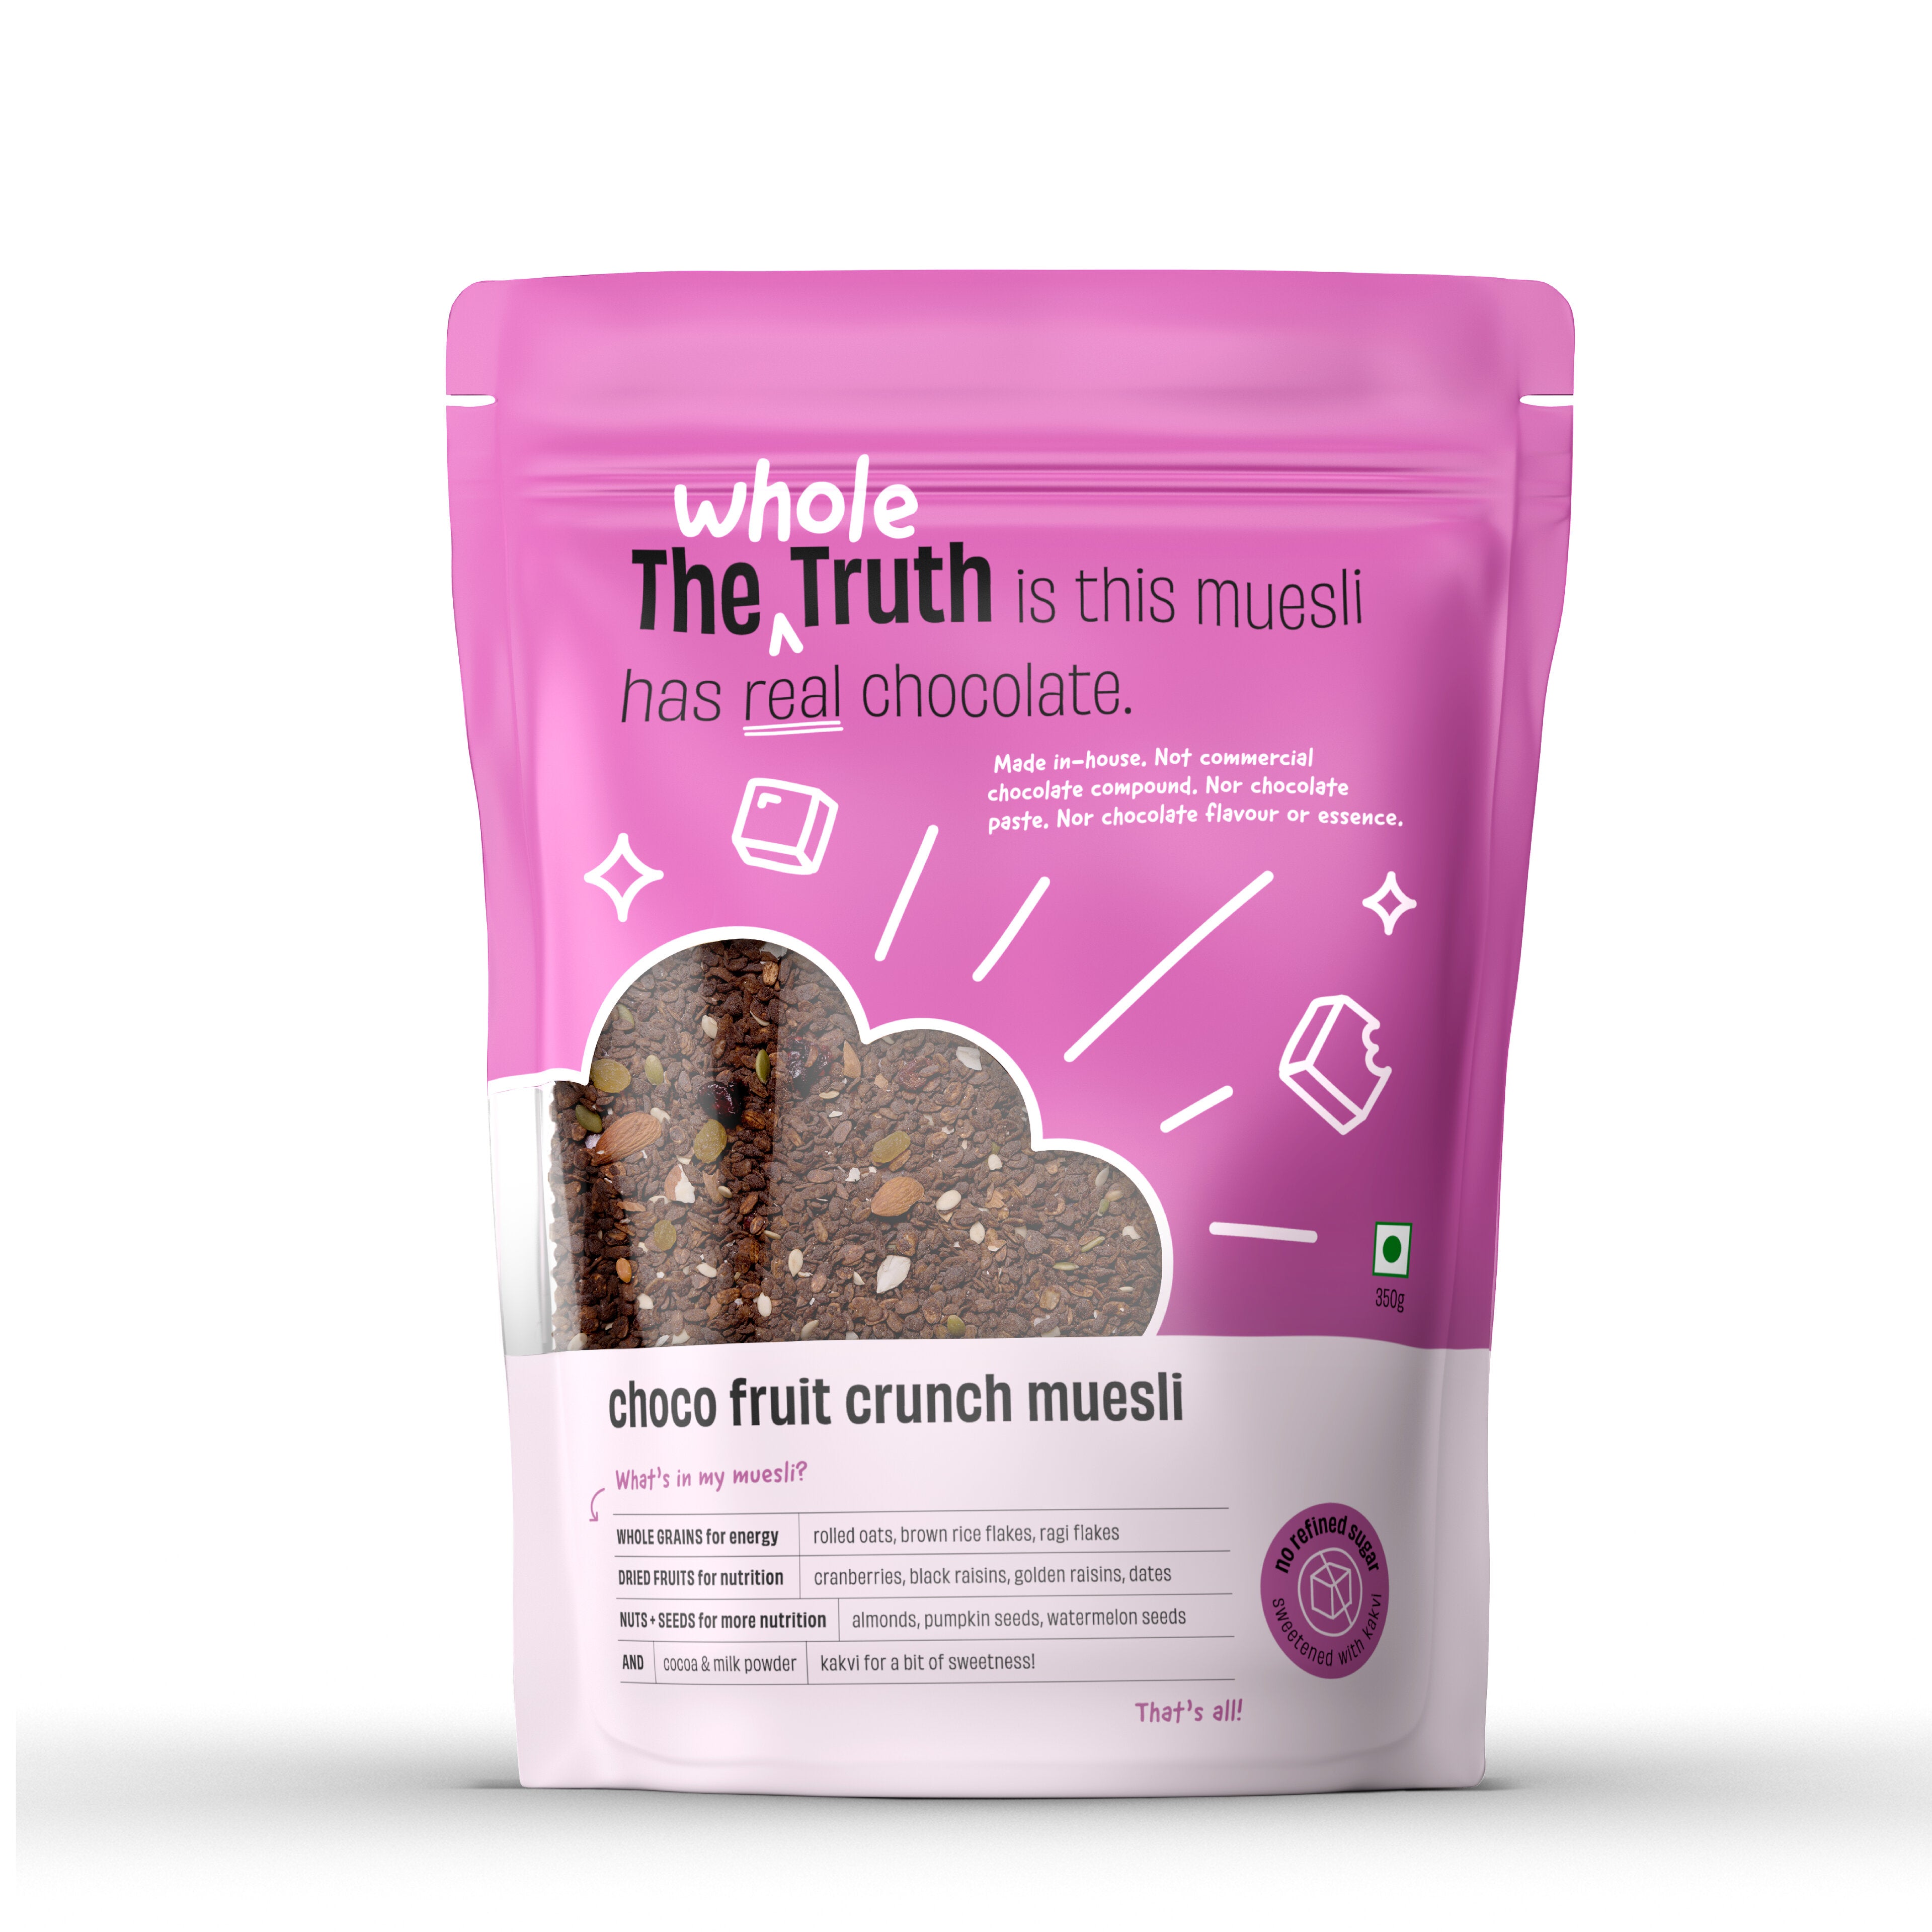 The Whole Truth - Breakfast Muesli - Choco Fruit Crunch